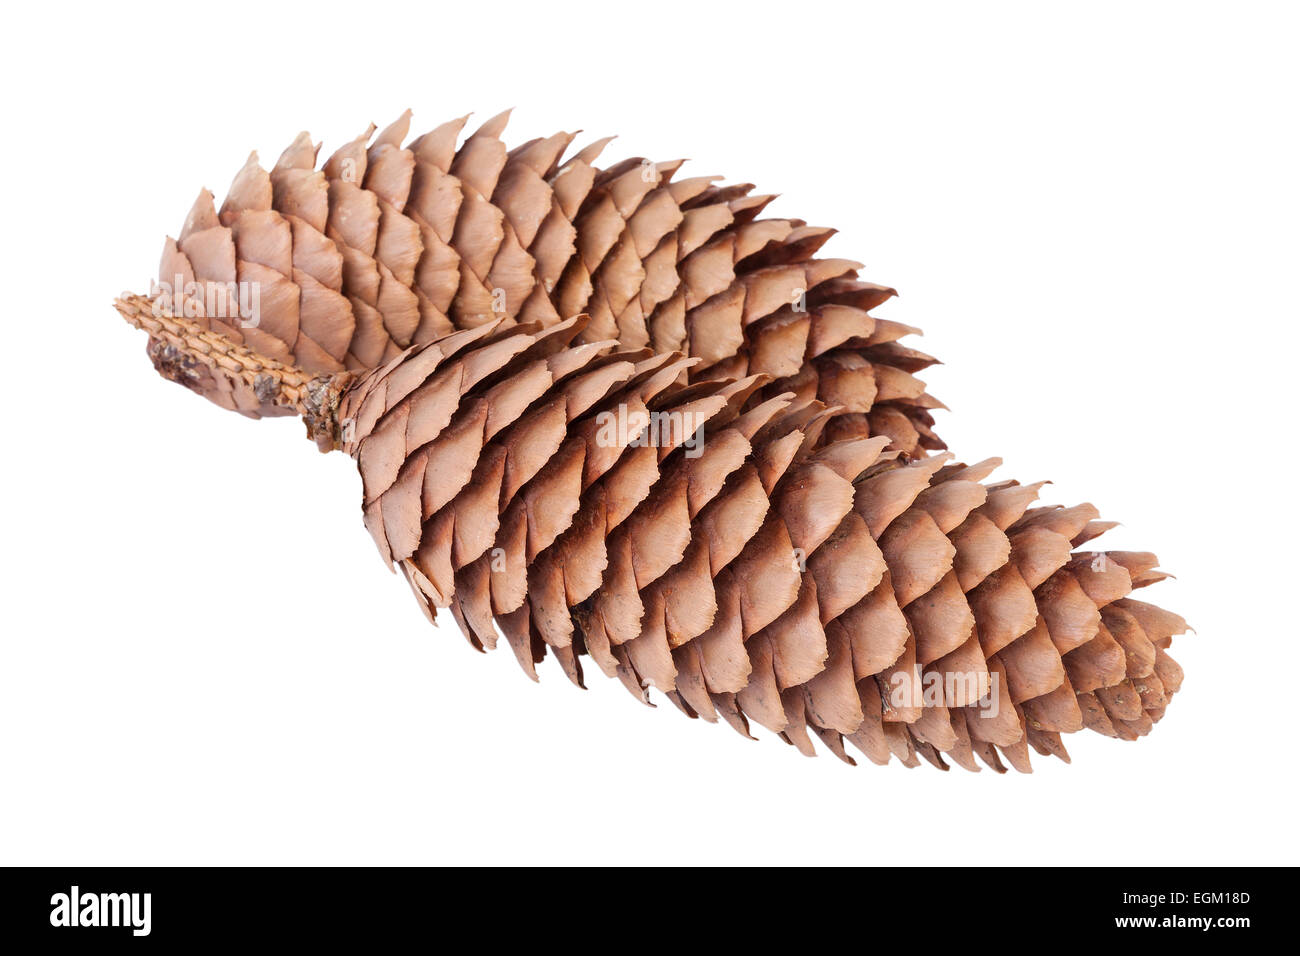 Spruce cones or cones of Picea abies Stock Photo